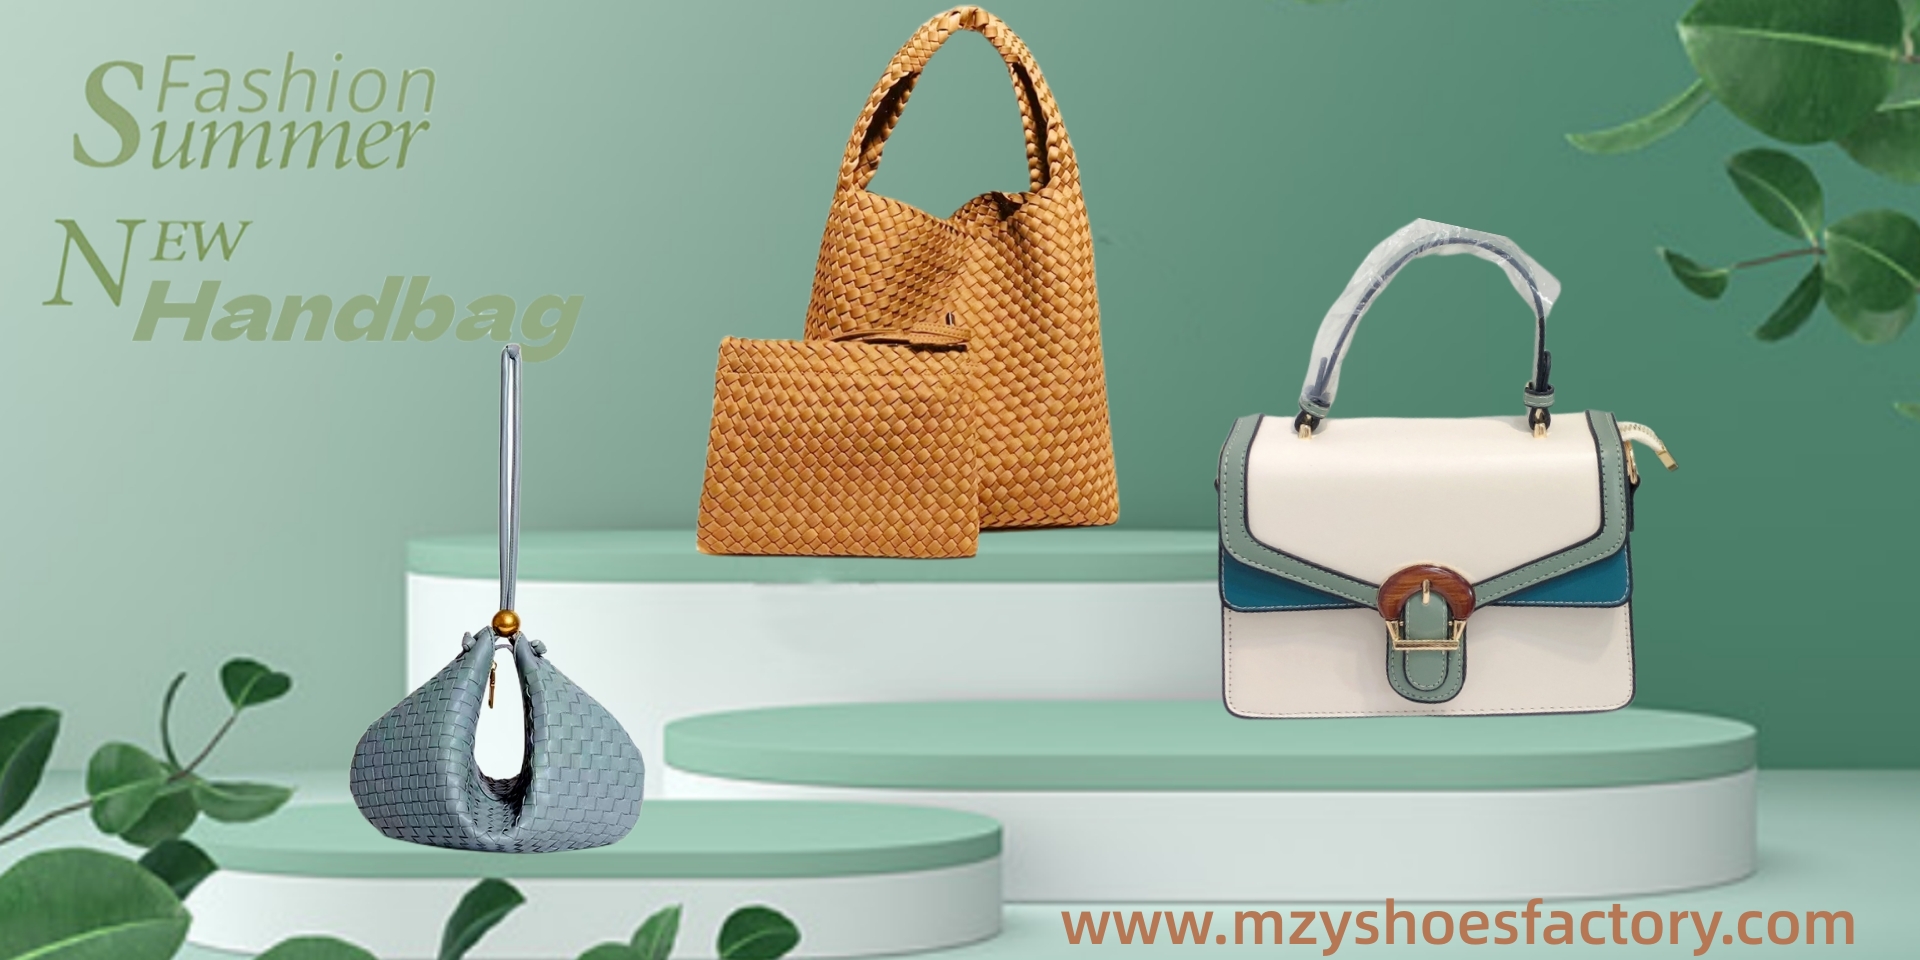 MZY factory handbag production department